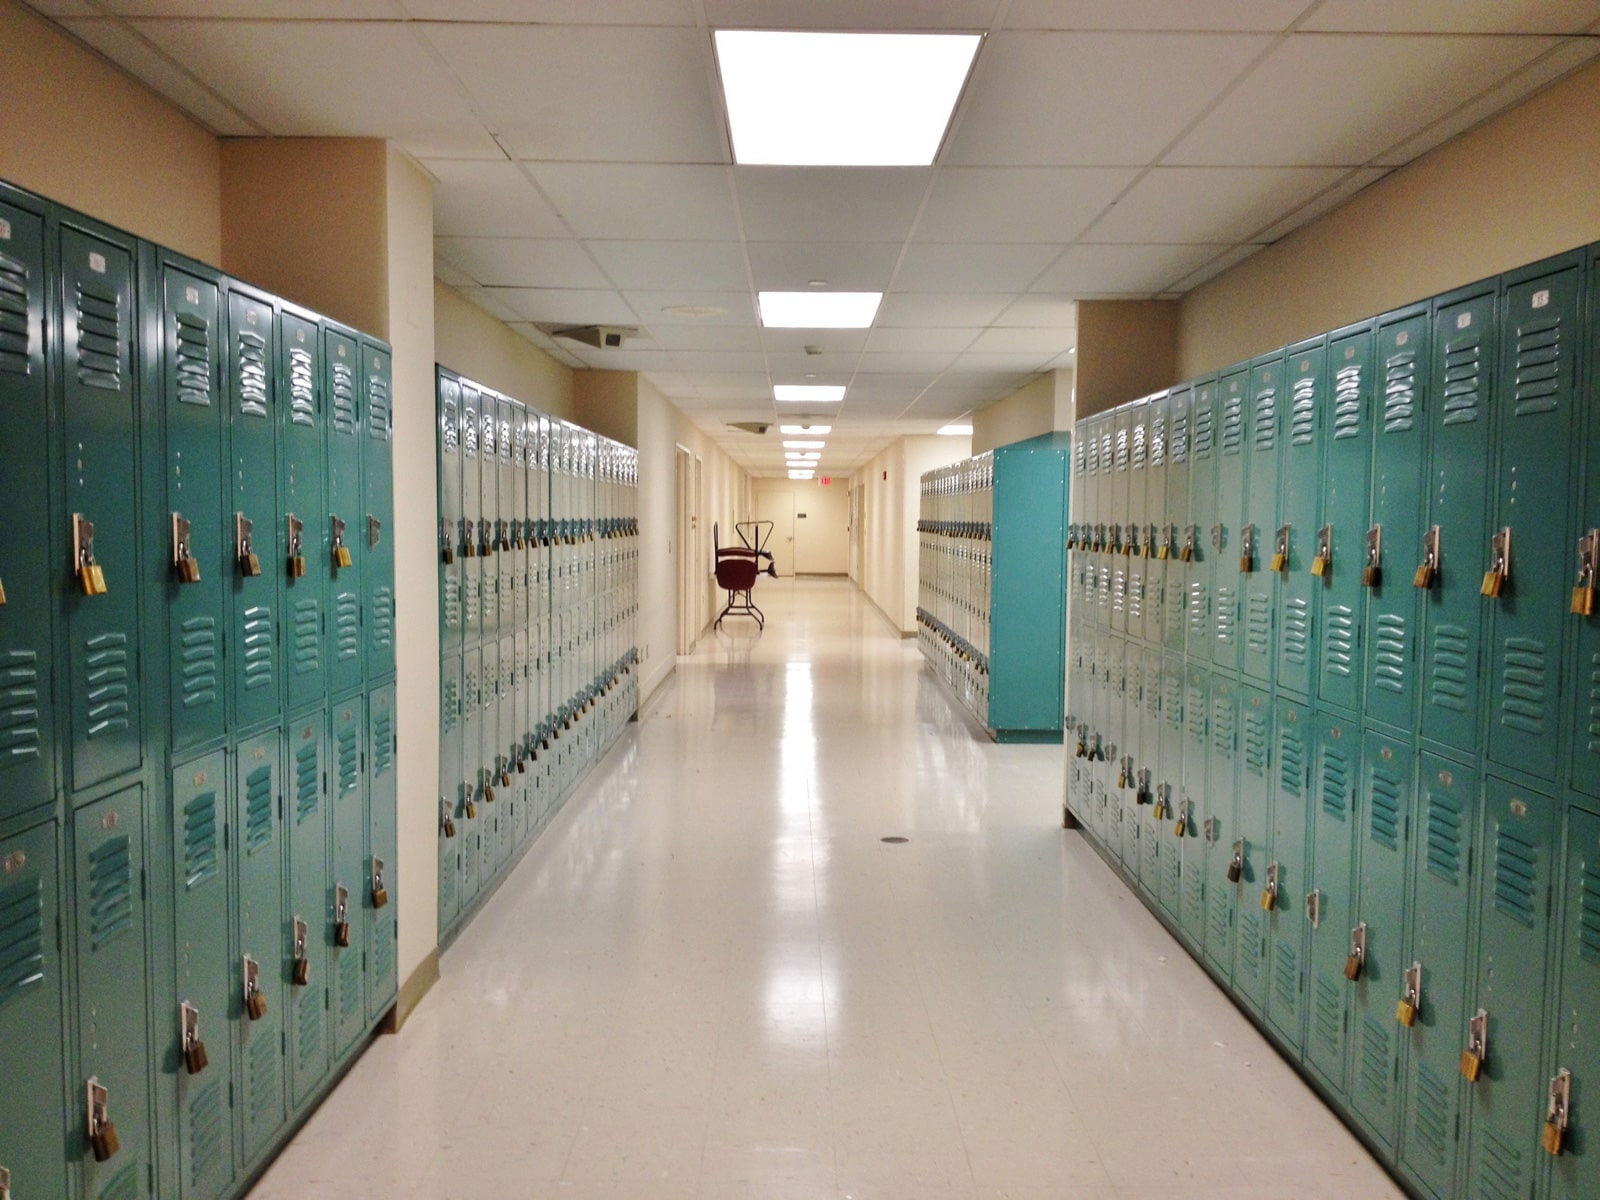 school lockers in hallway